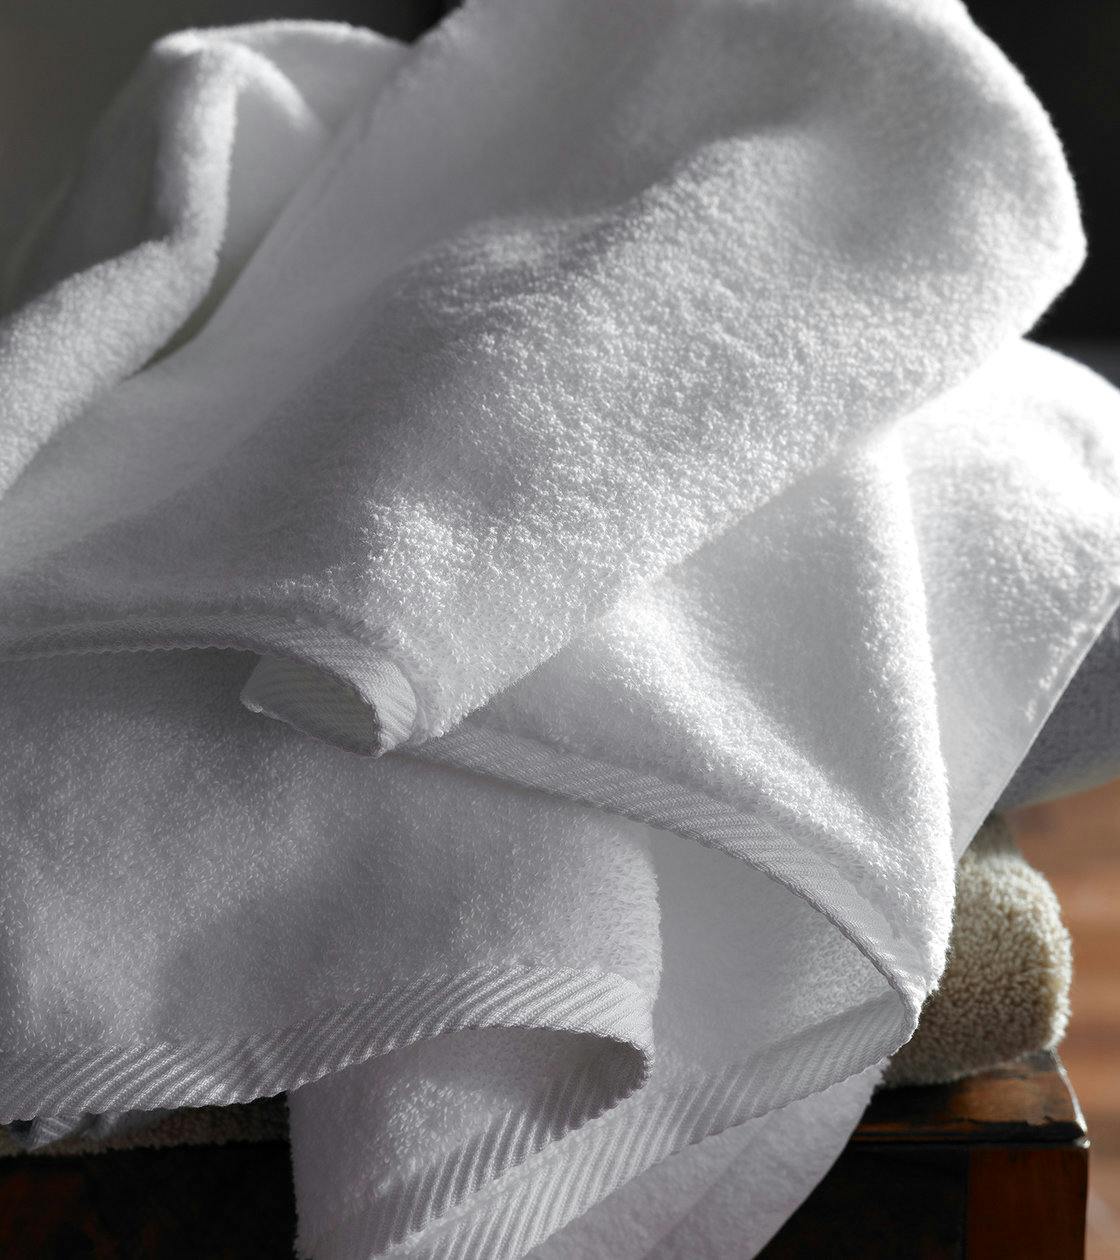 Matouk Milagro Bath Towels in Periwinkle - Emissary Fine Linens